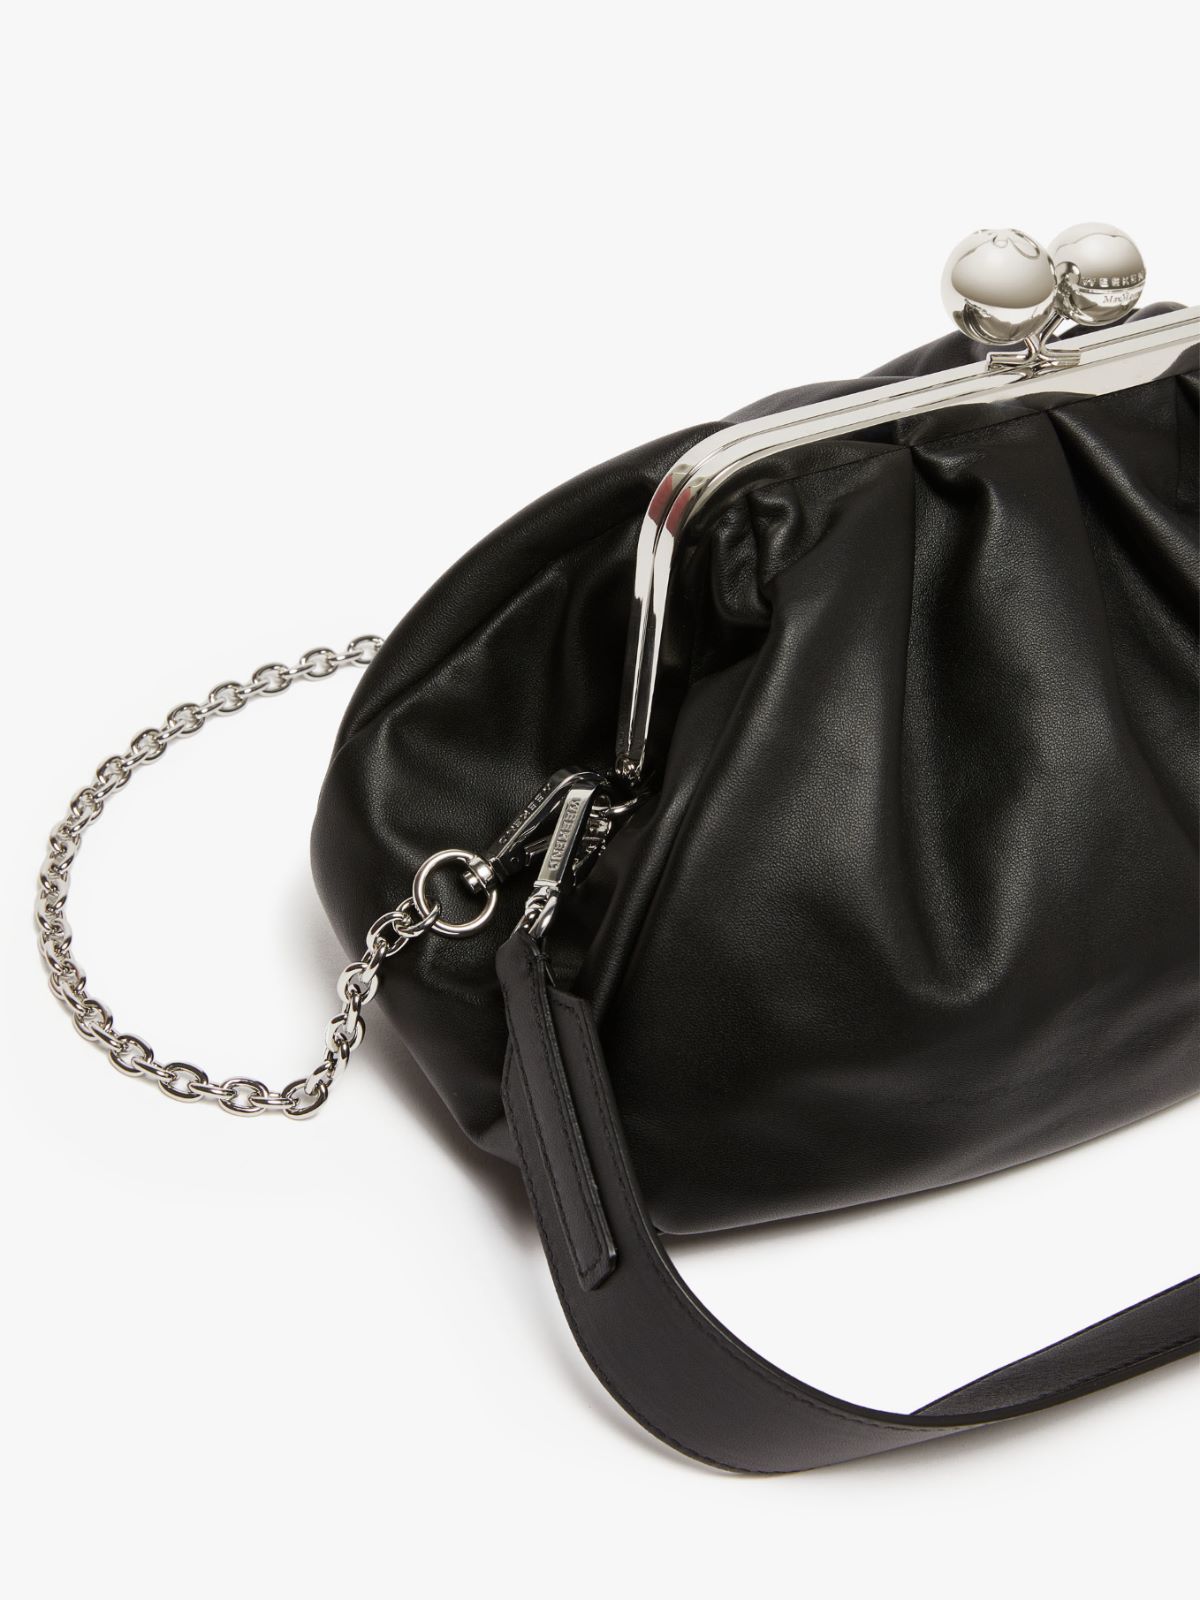 Weekend Max Mara | Woman - Medium Pasticcino Bag in Nappa Leather - Dark Green